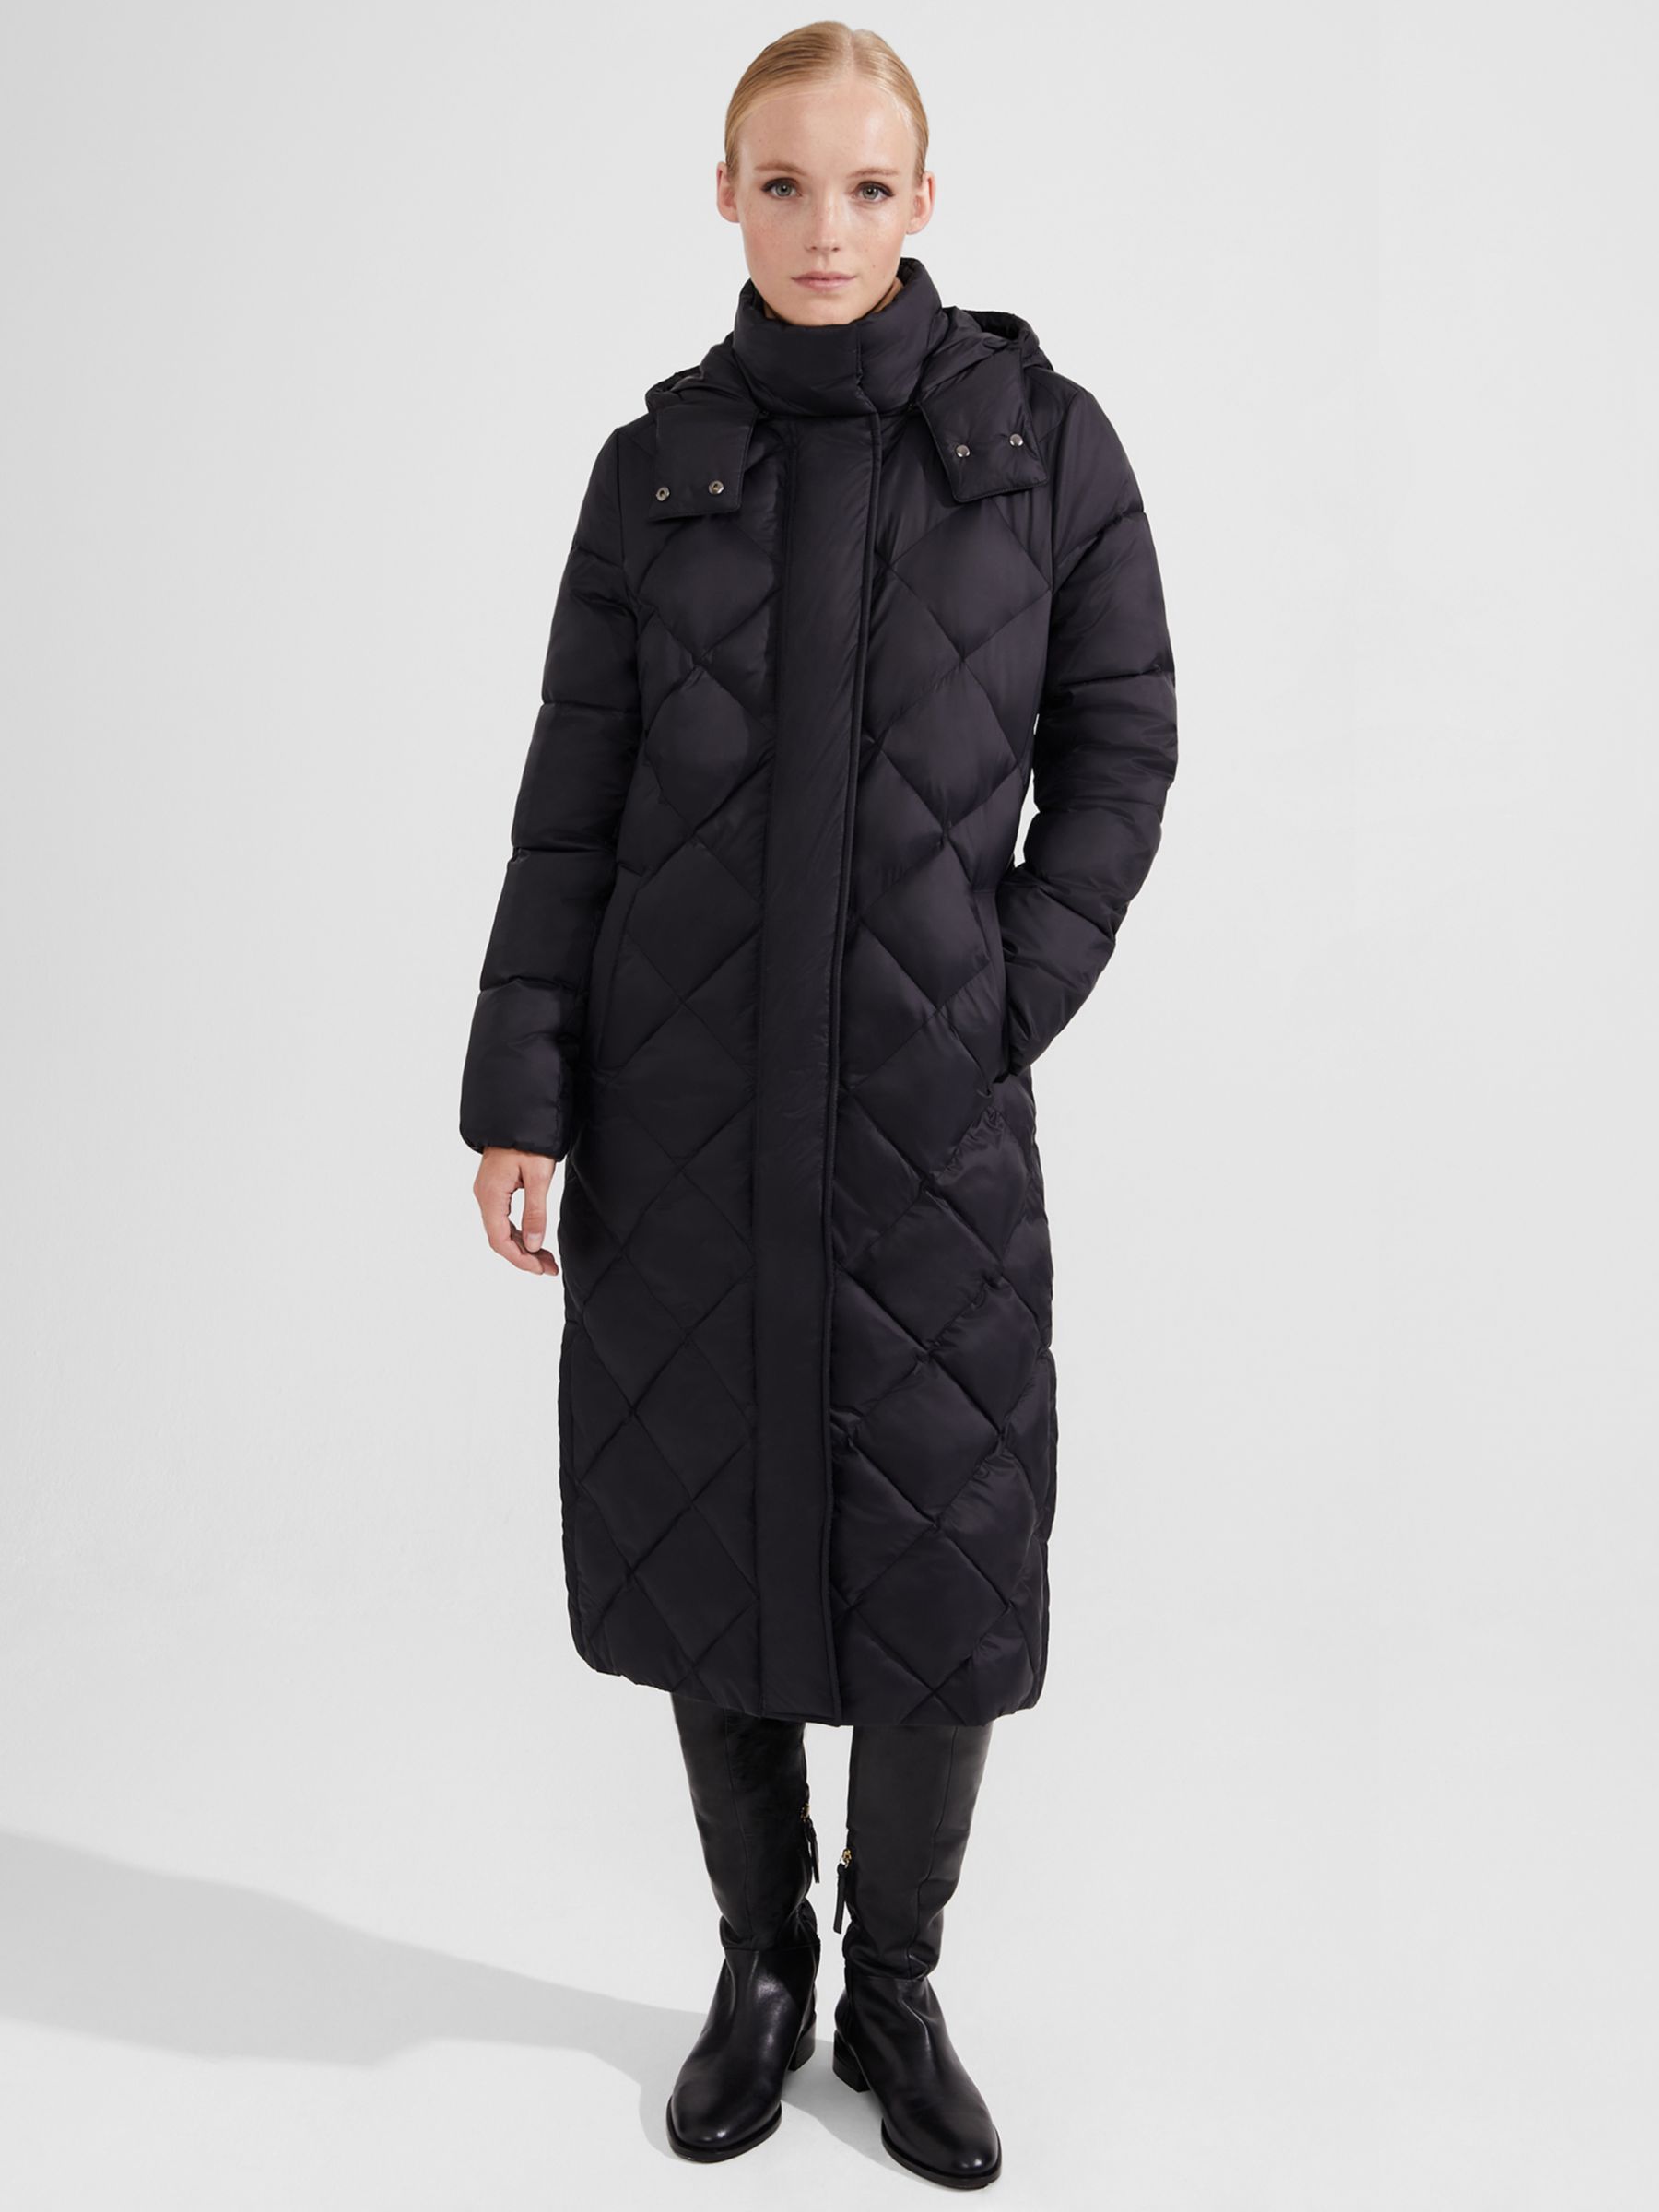 Hobbs Avril Puffer Hooded Coat, Black at John Lewis & Partners